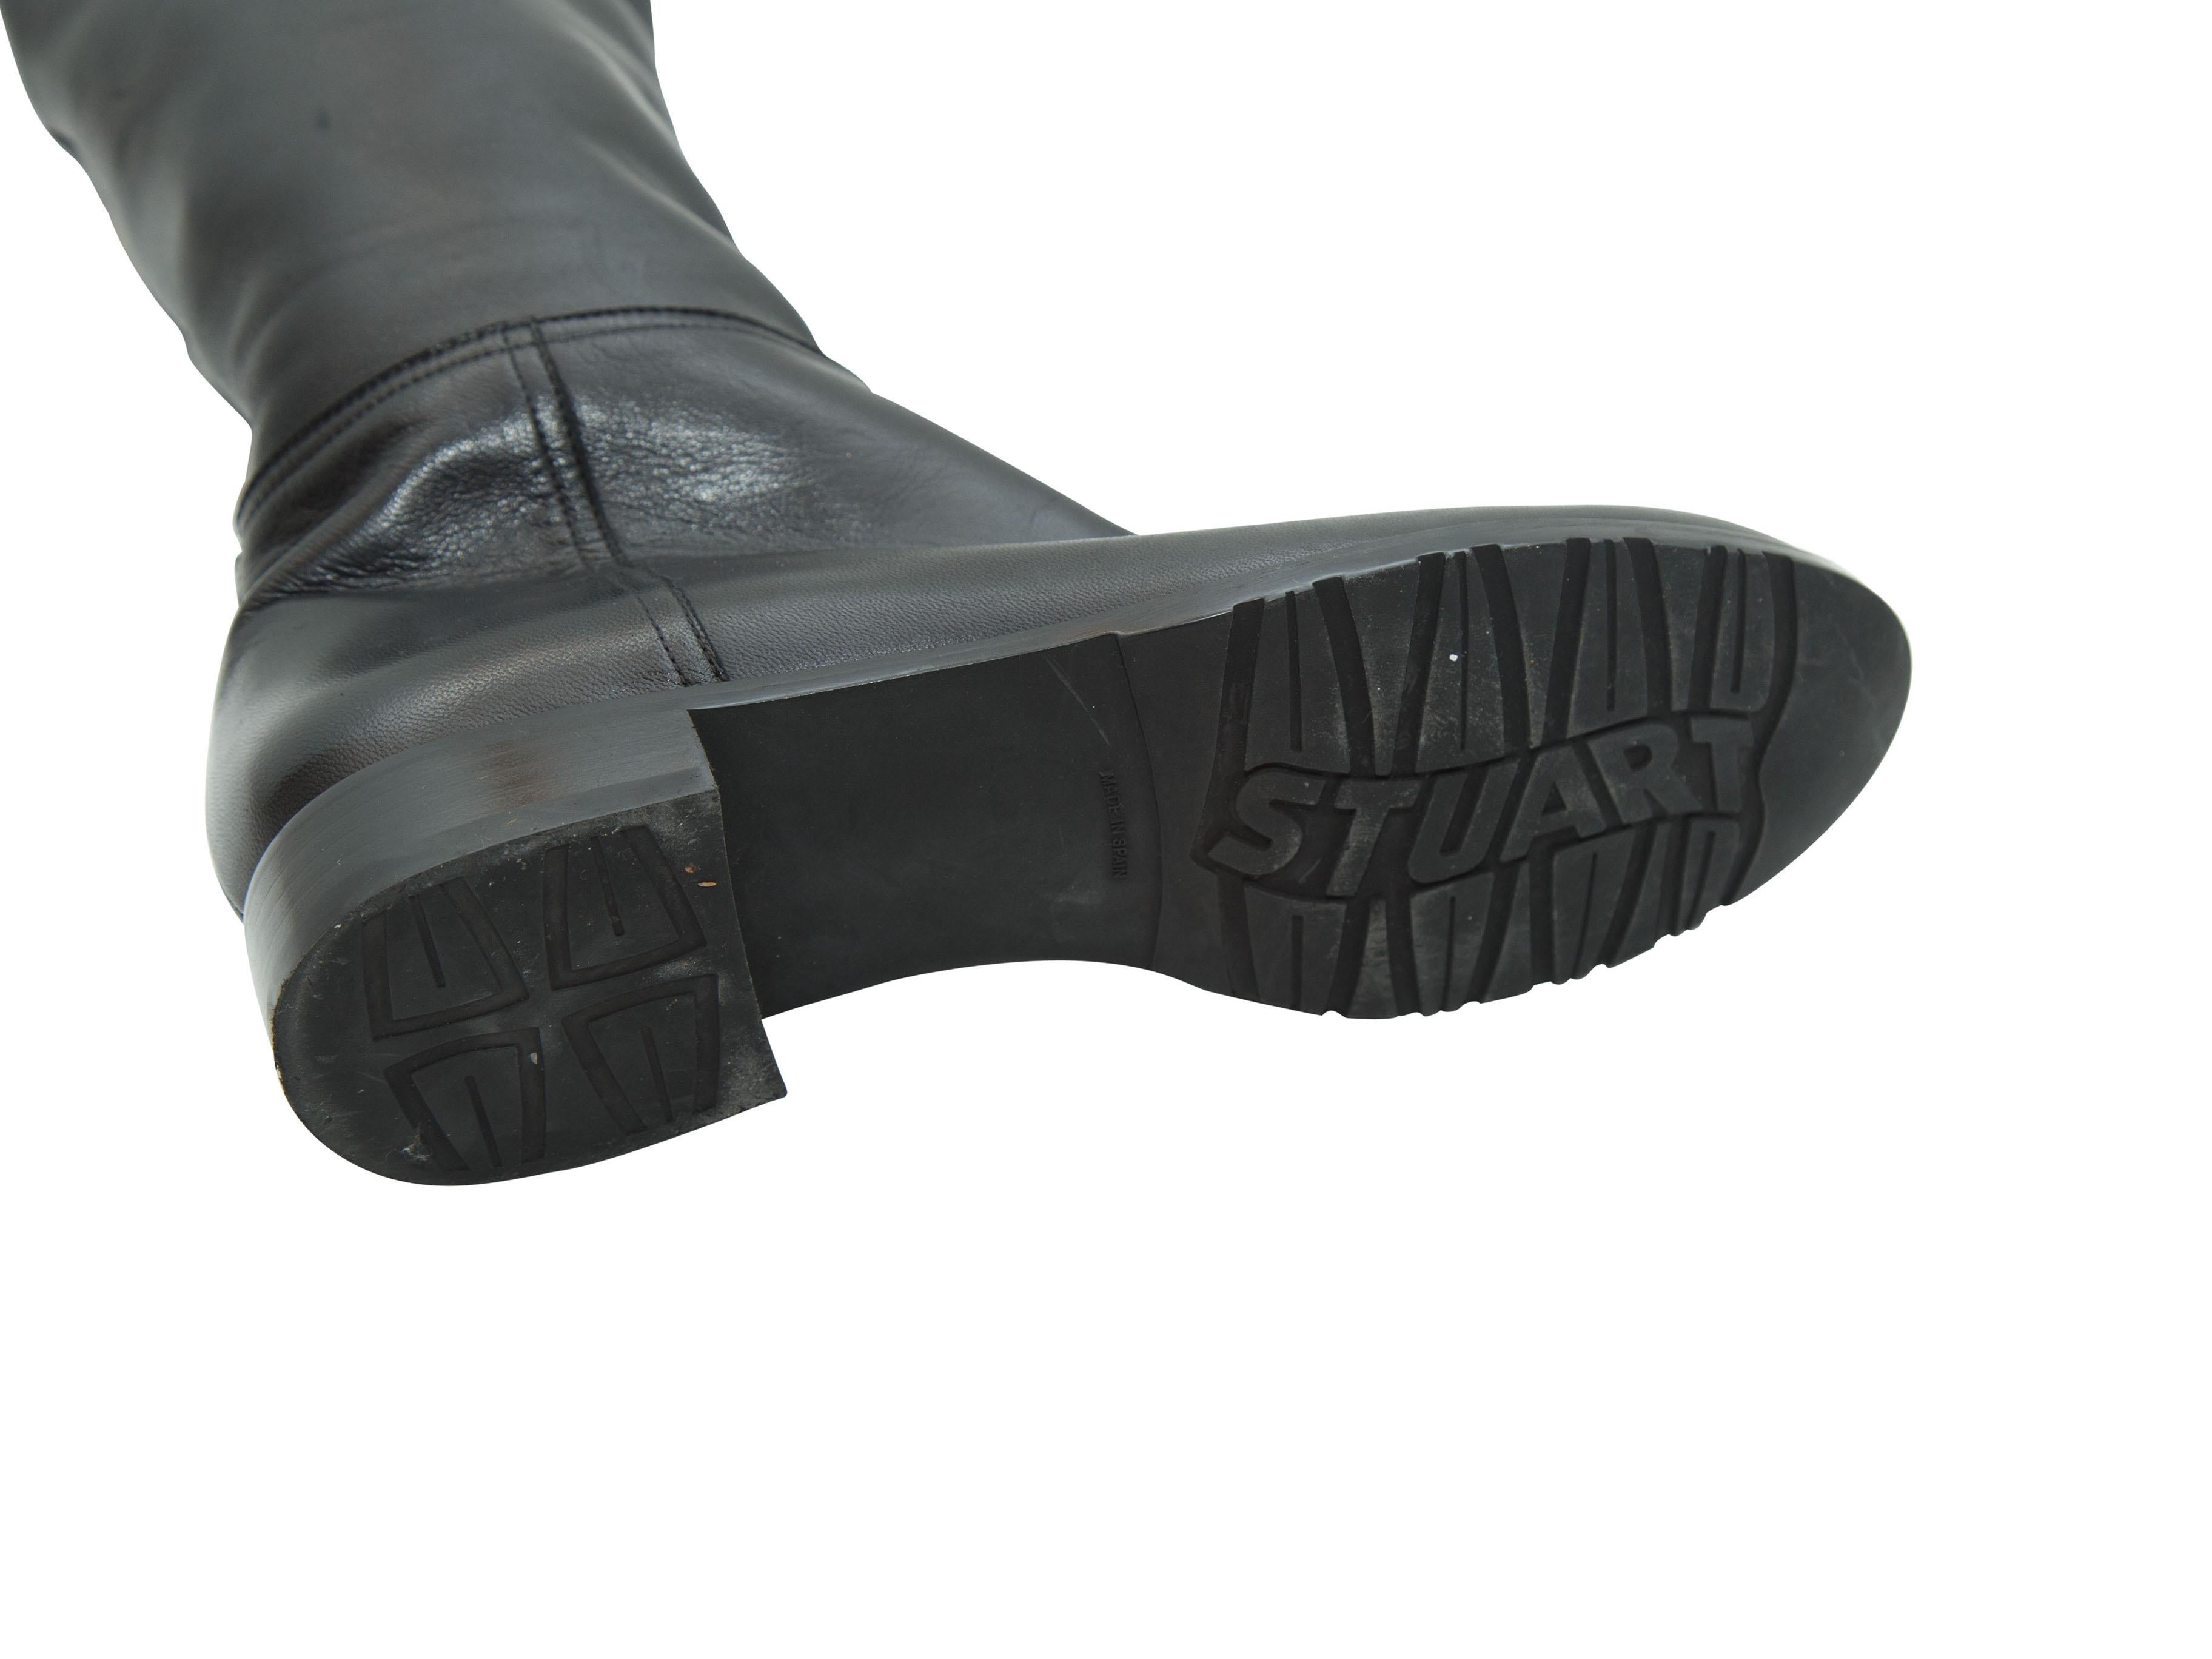 Women's Stuart Weitzman Black Leather Thigh-High Boots